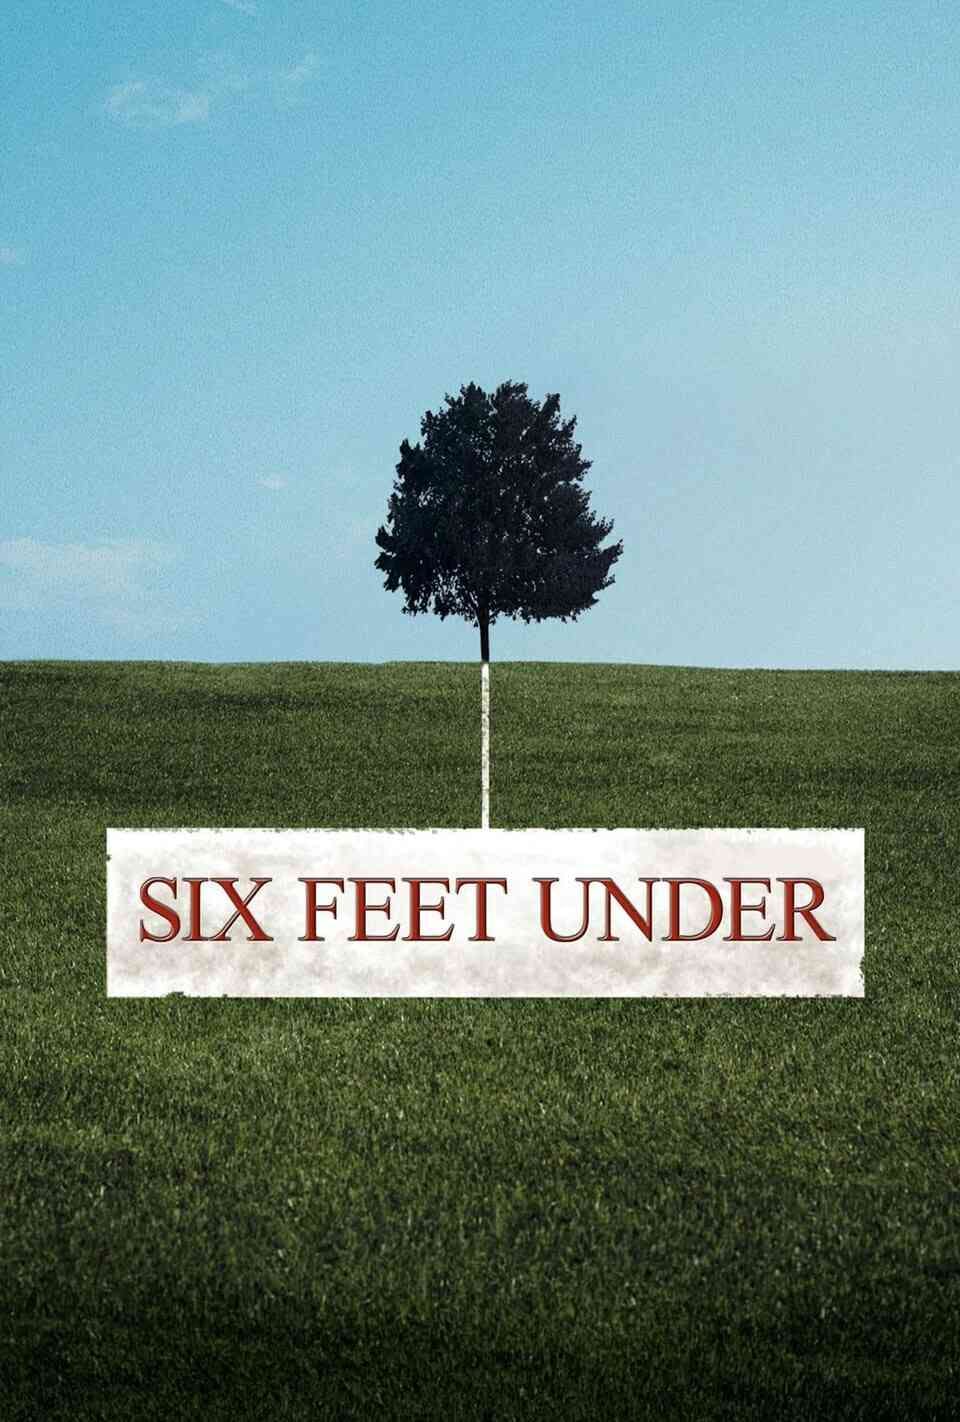 Read Six Feet Under screenplay (poster)